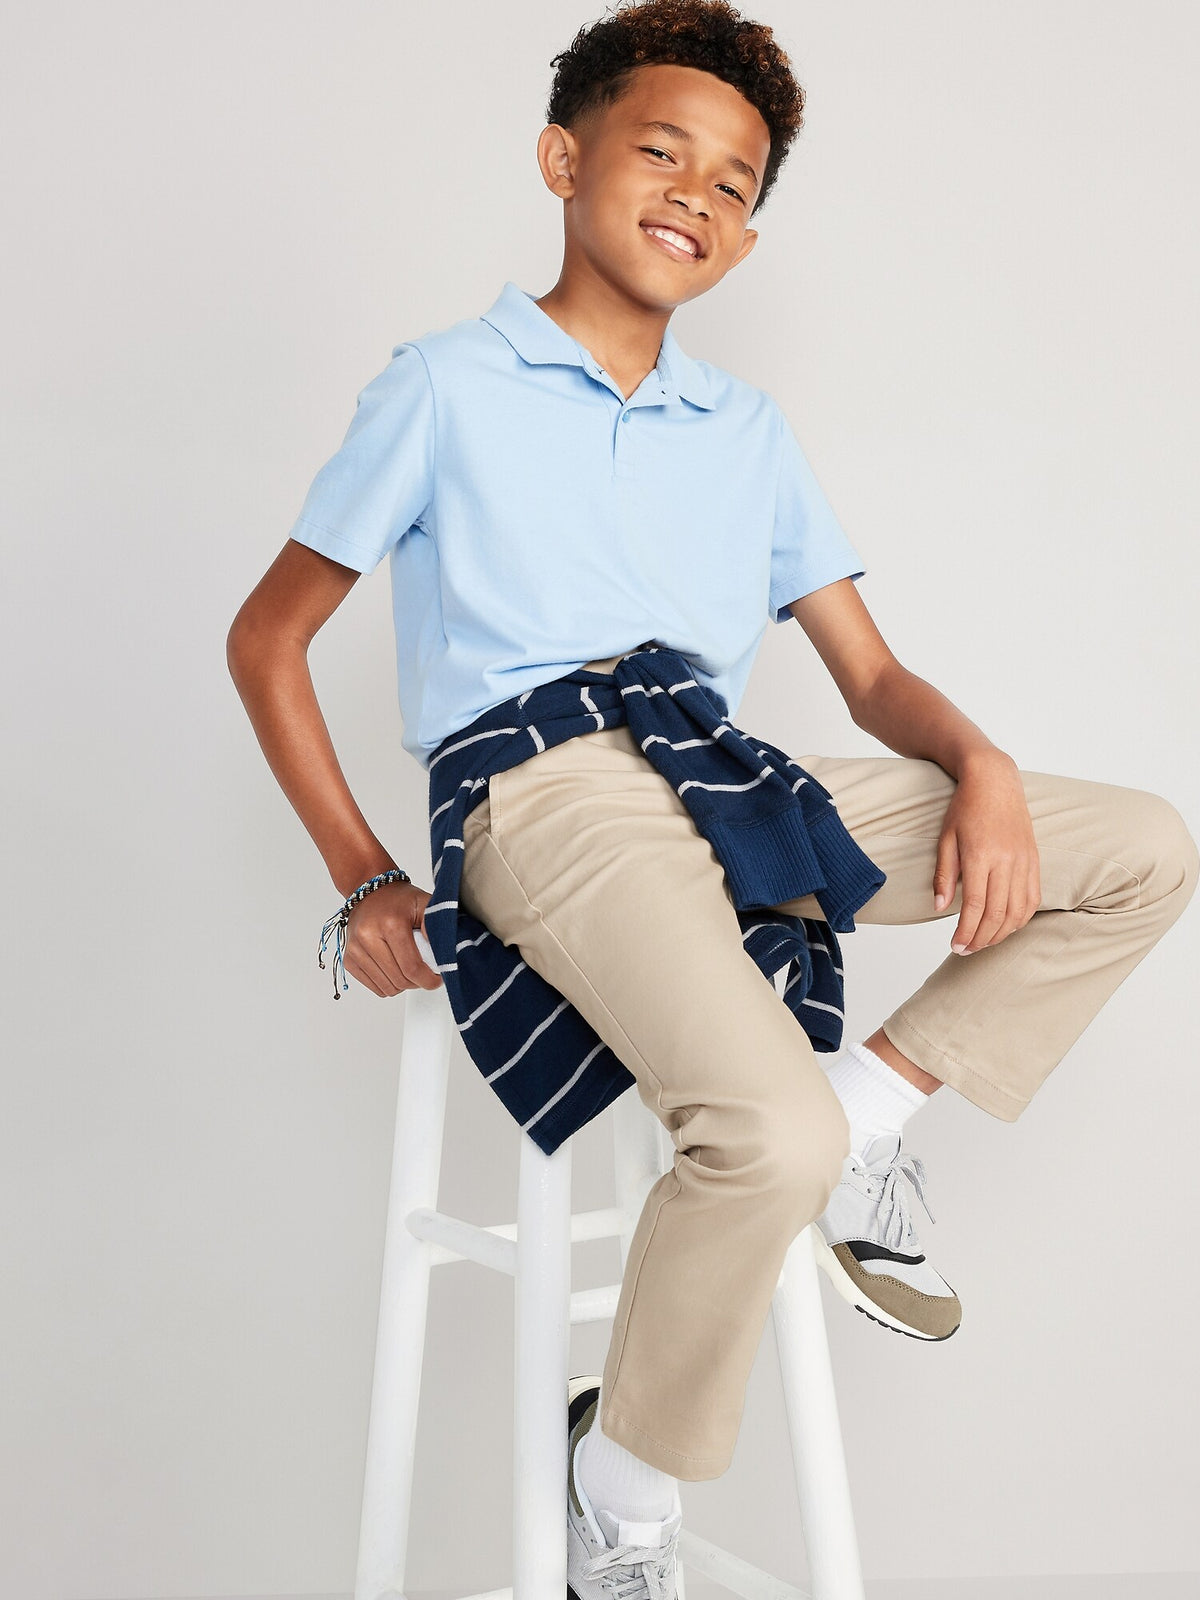 Slim Built-In Flex Chino School Uniform Pants for Boys